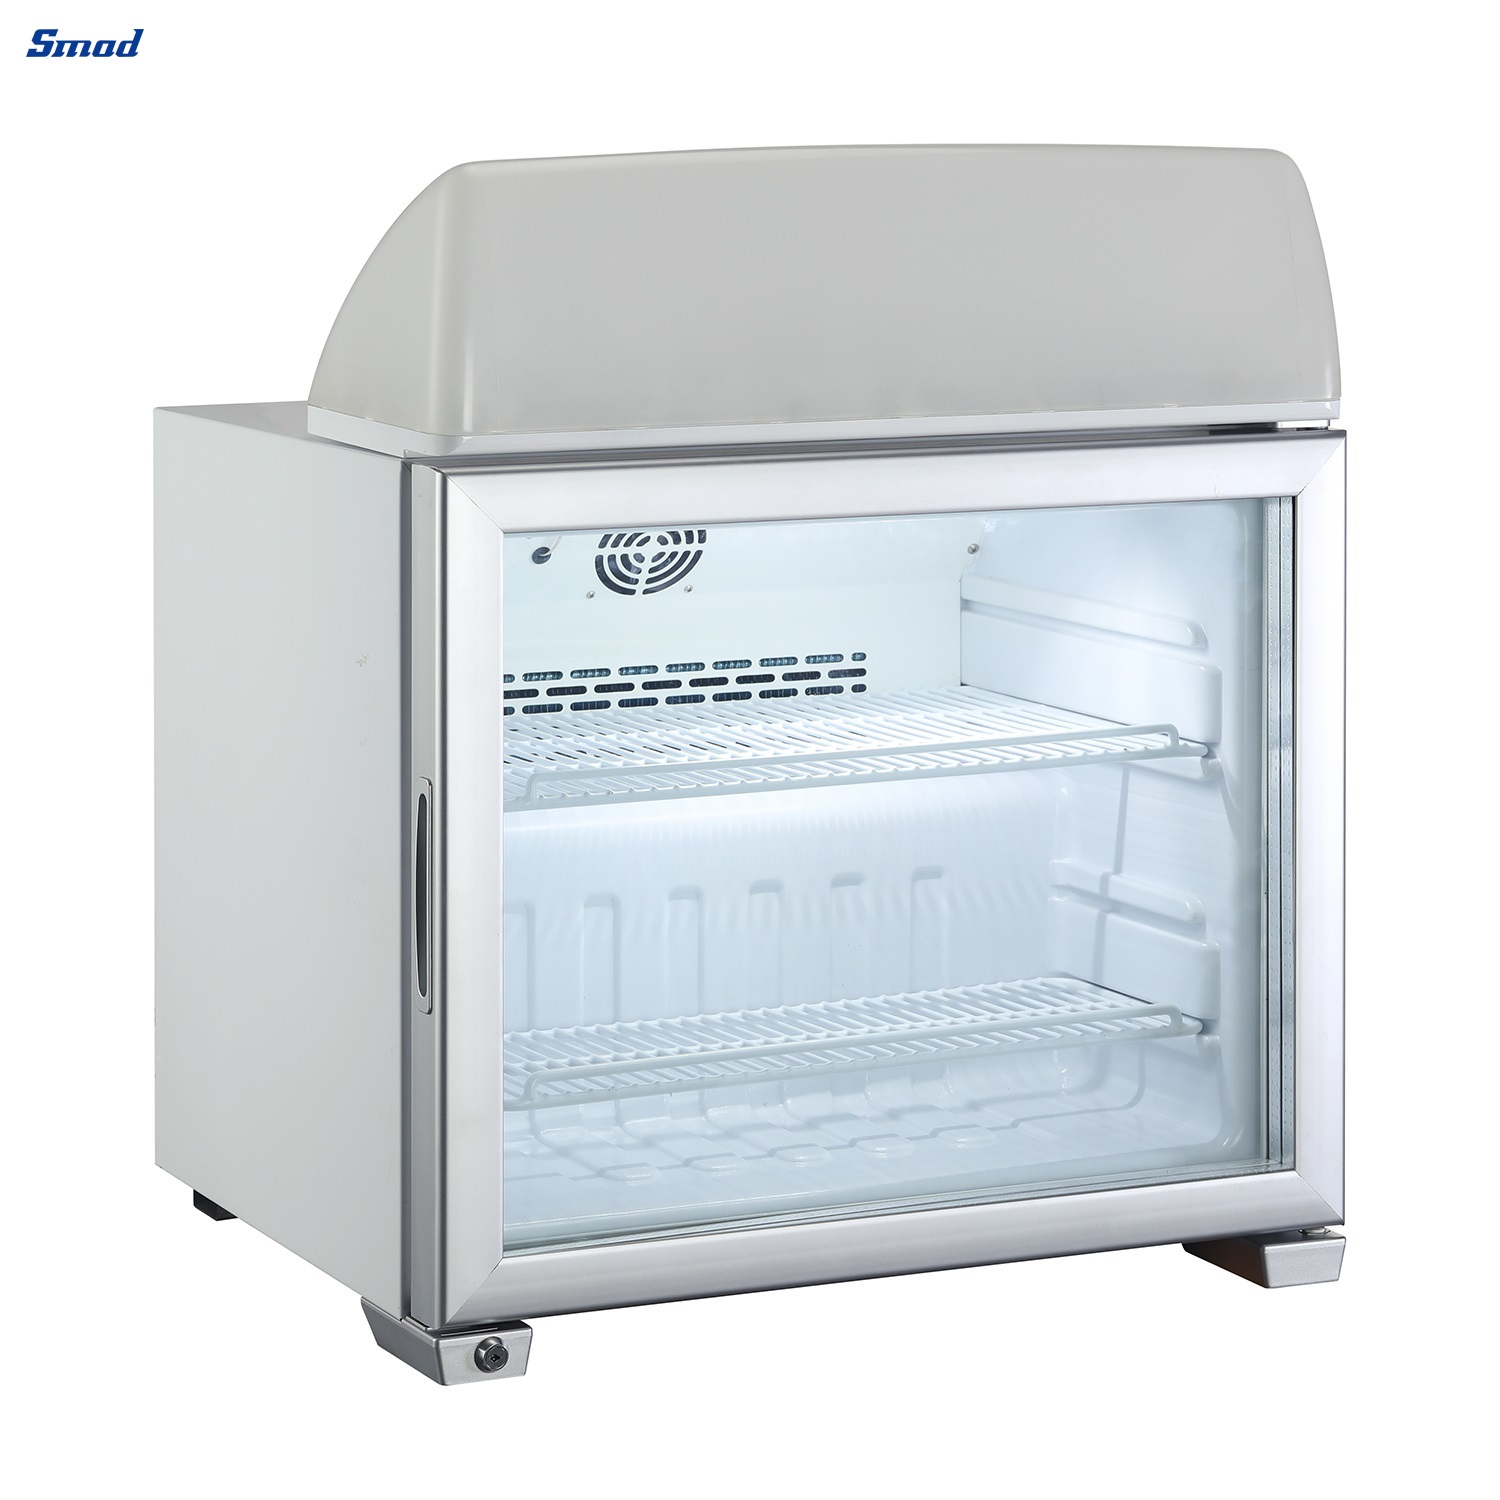 
Smad 49L Single Glass Door Countertop Ice Cream Display Freezer with Digital Temperature Controller